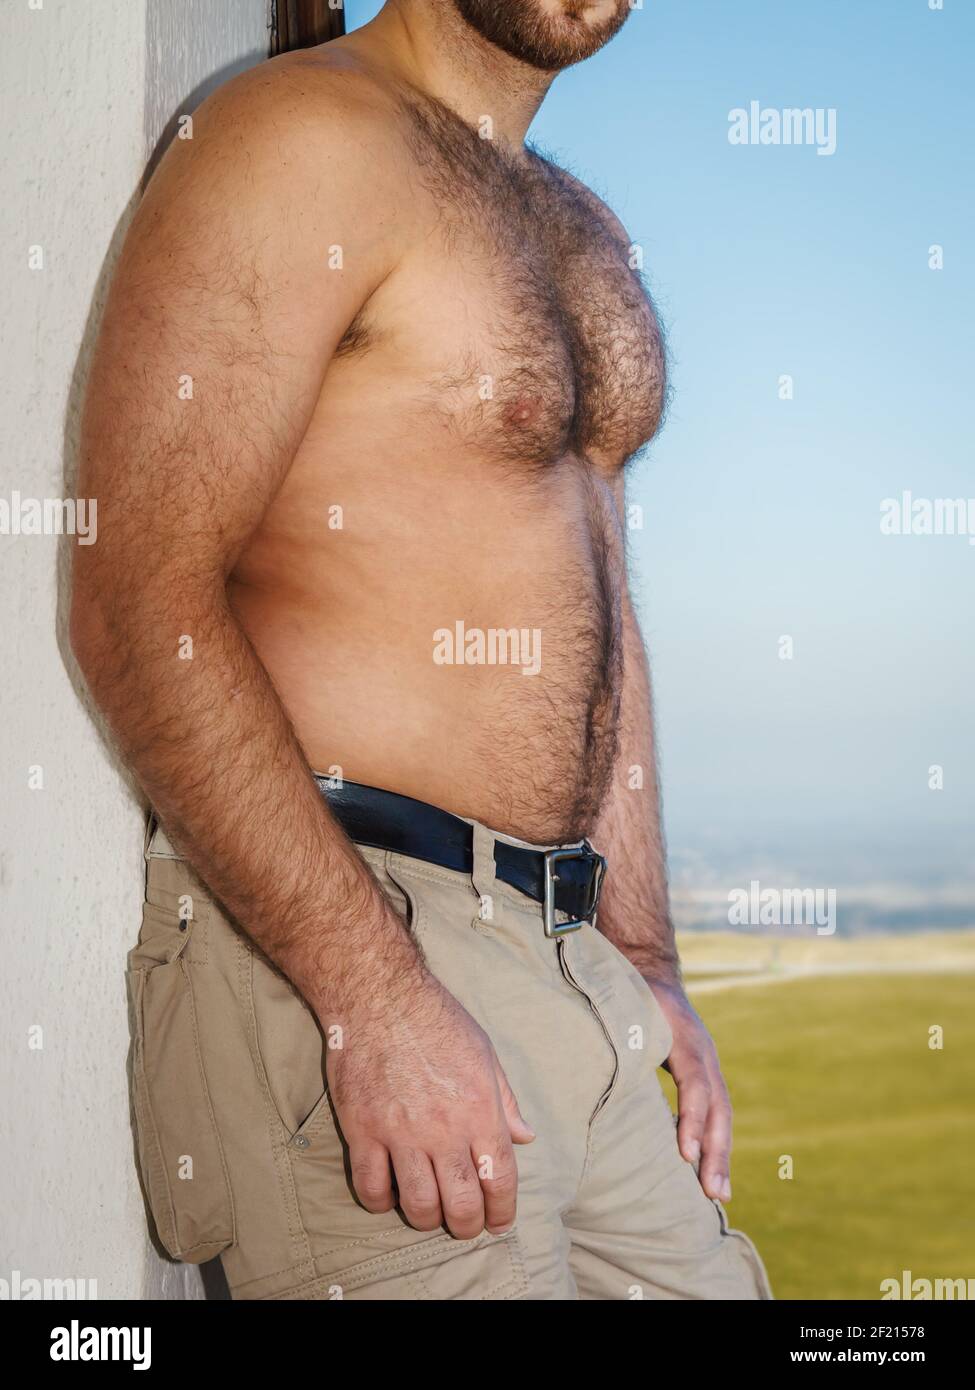 Very hairy male body Stock Photo - Alamy